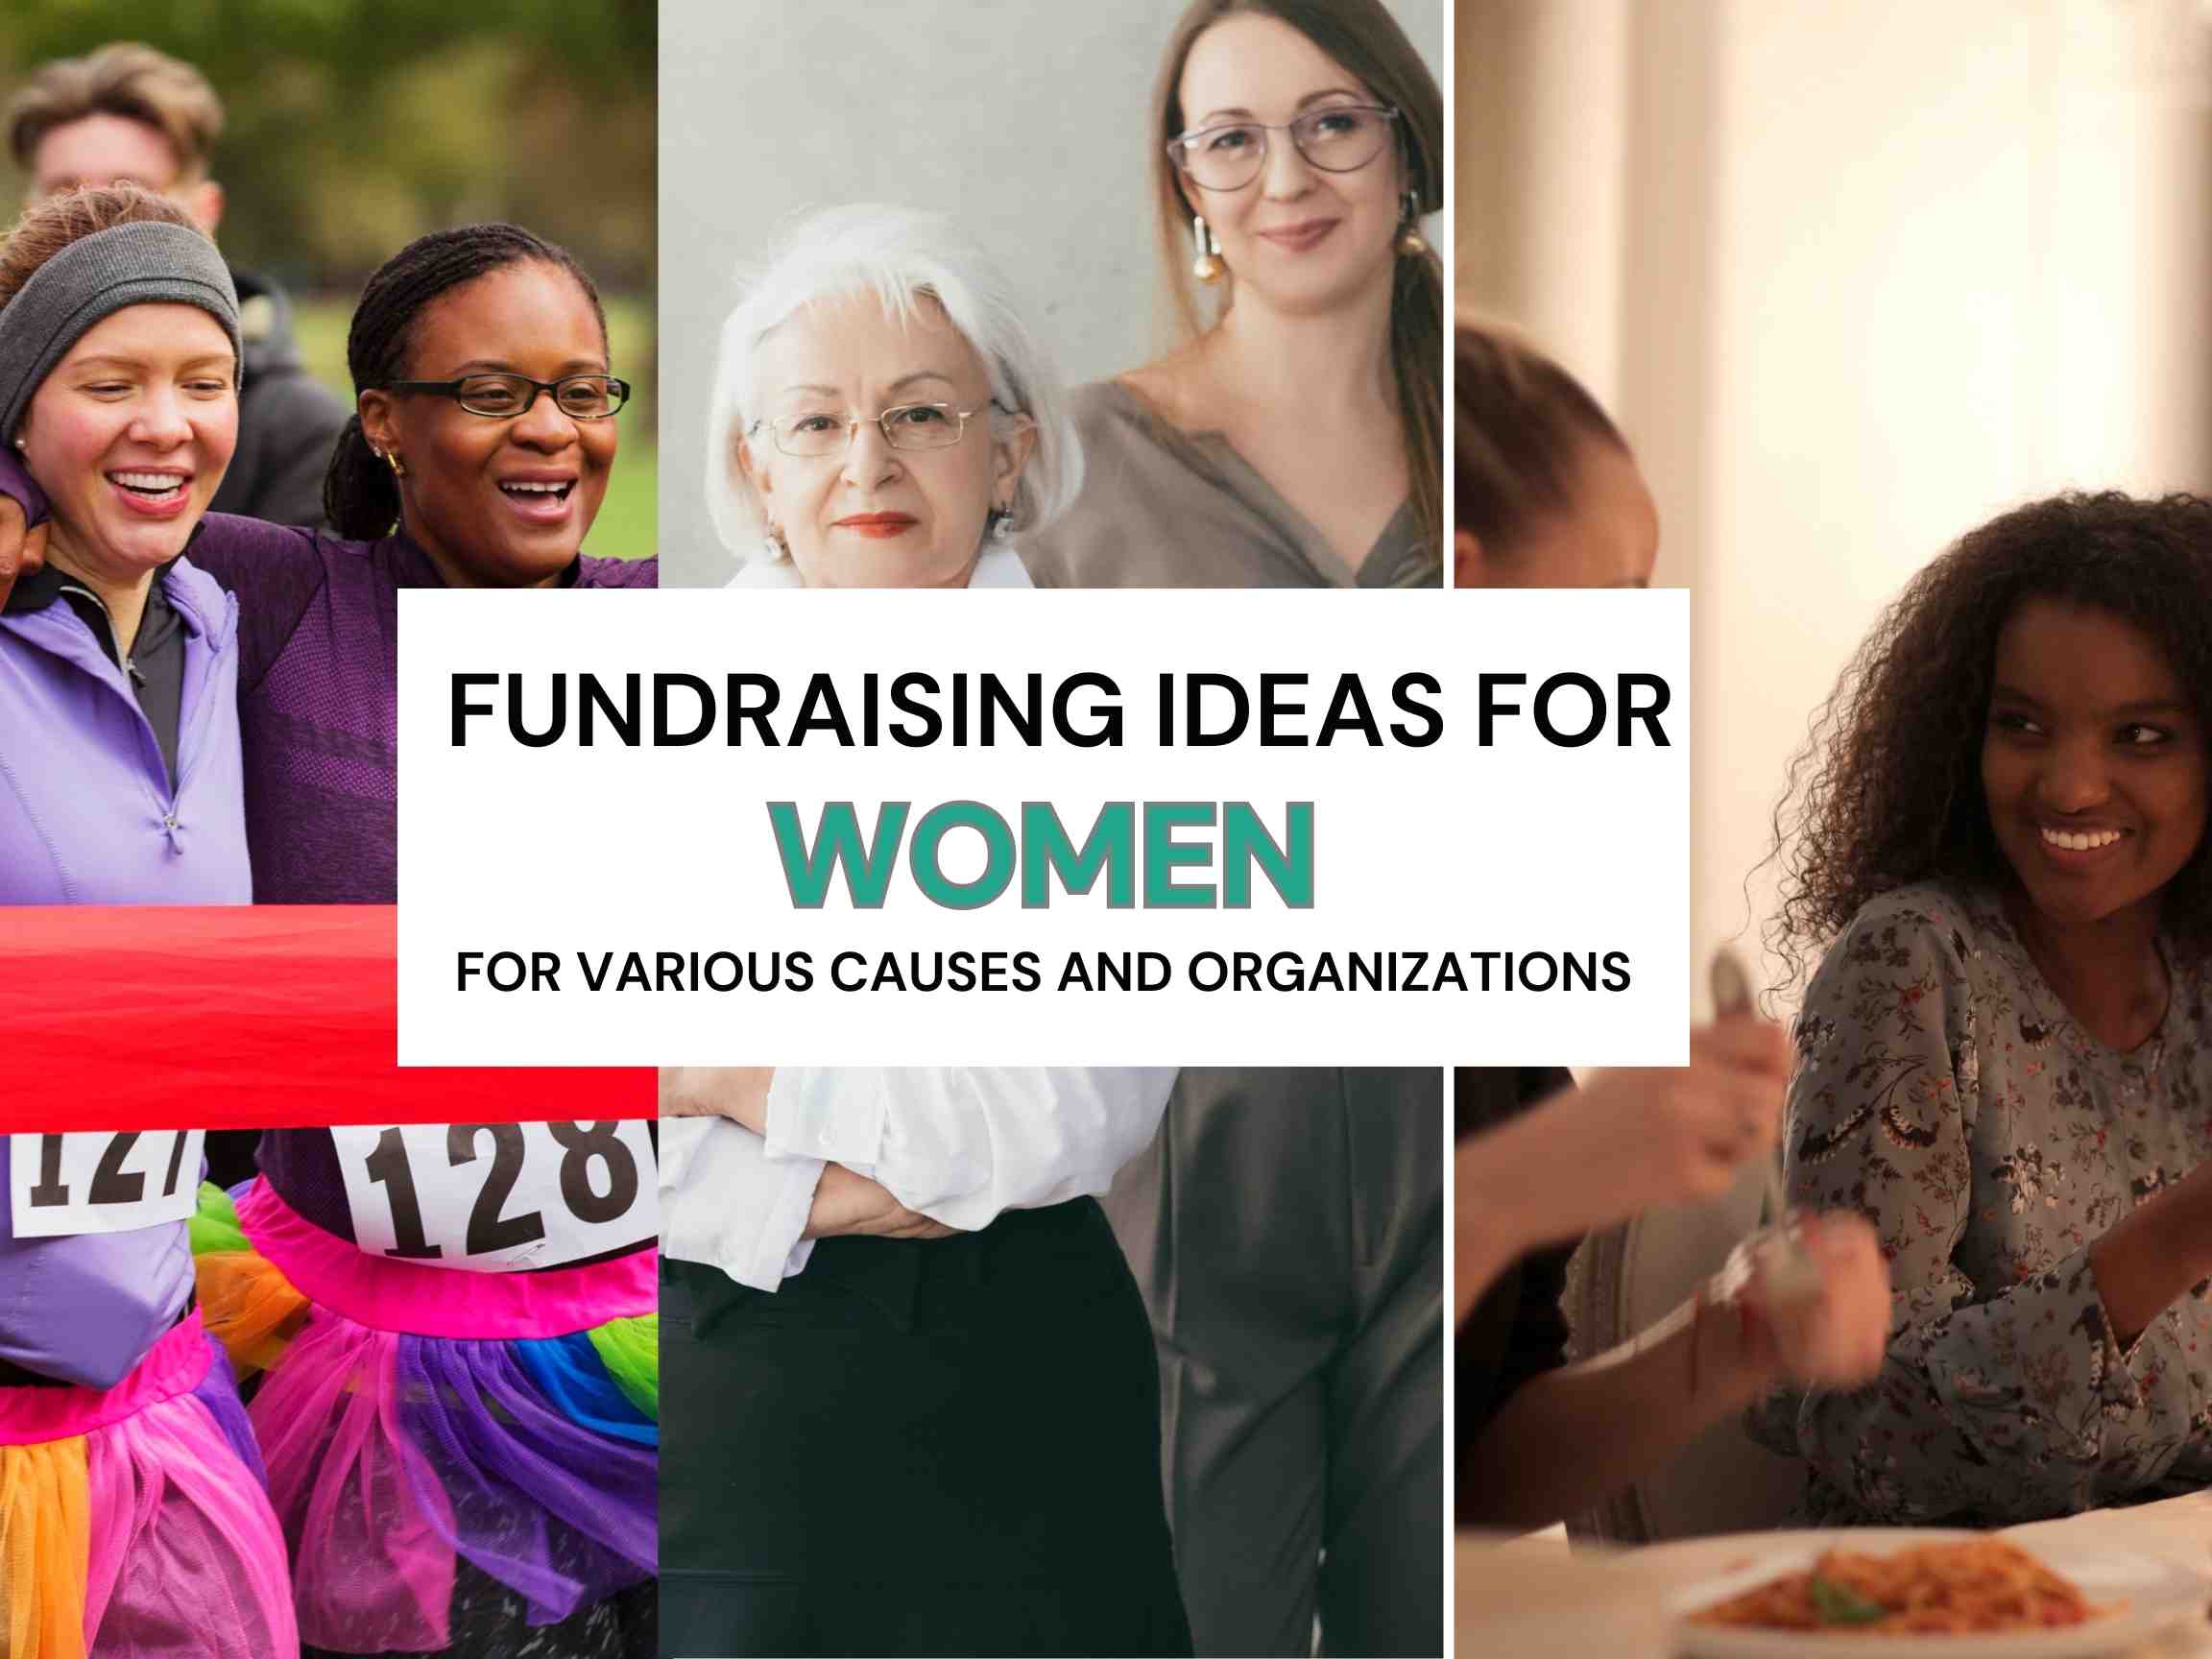 Fundraising ideas for women